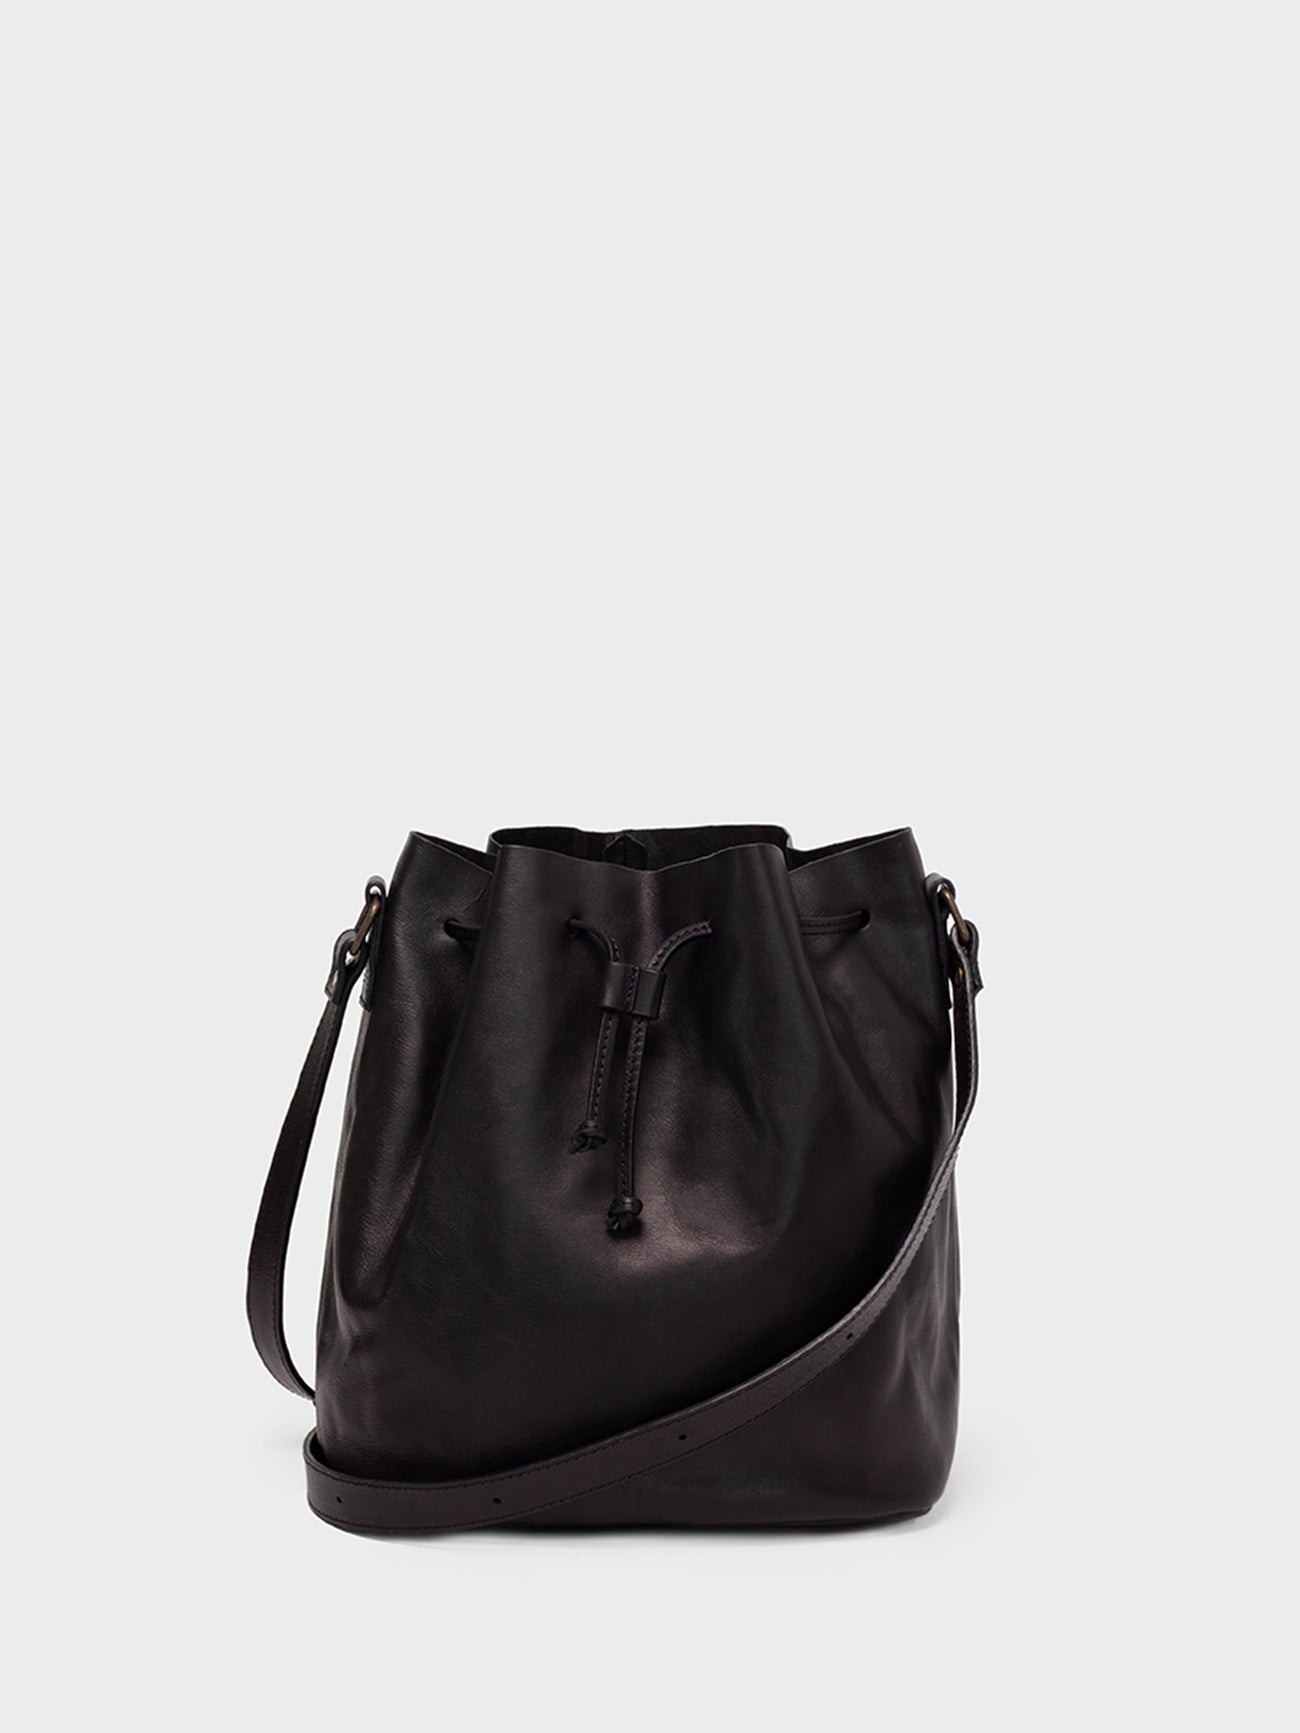 Piazza Edition Franziska Bucket Bag in dark brown/rosé - in the